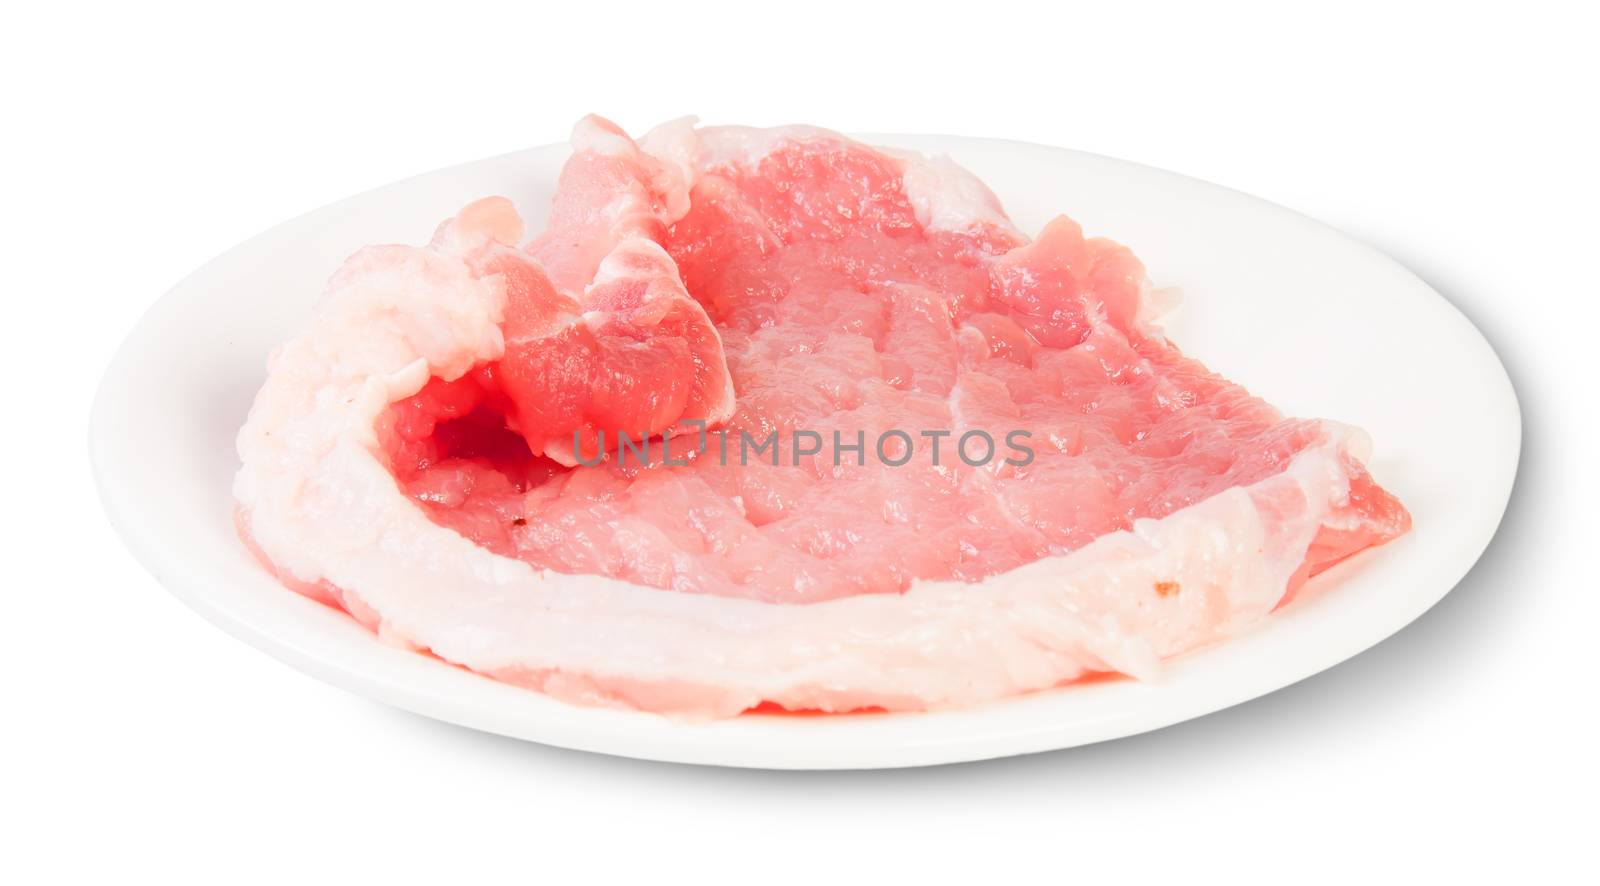 Raw Pork Schnitzel On A White Plate by Cipariss